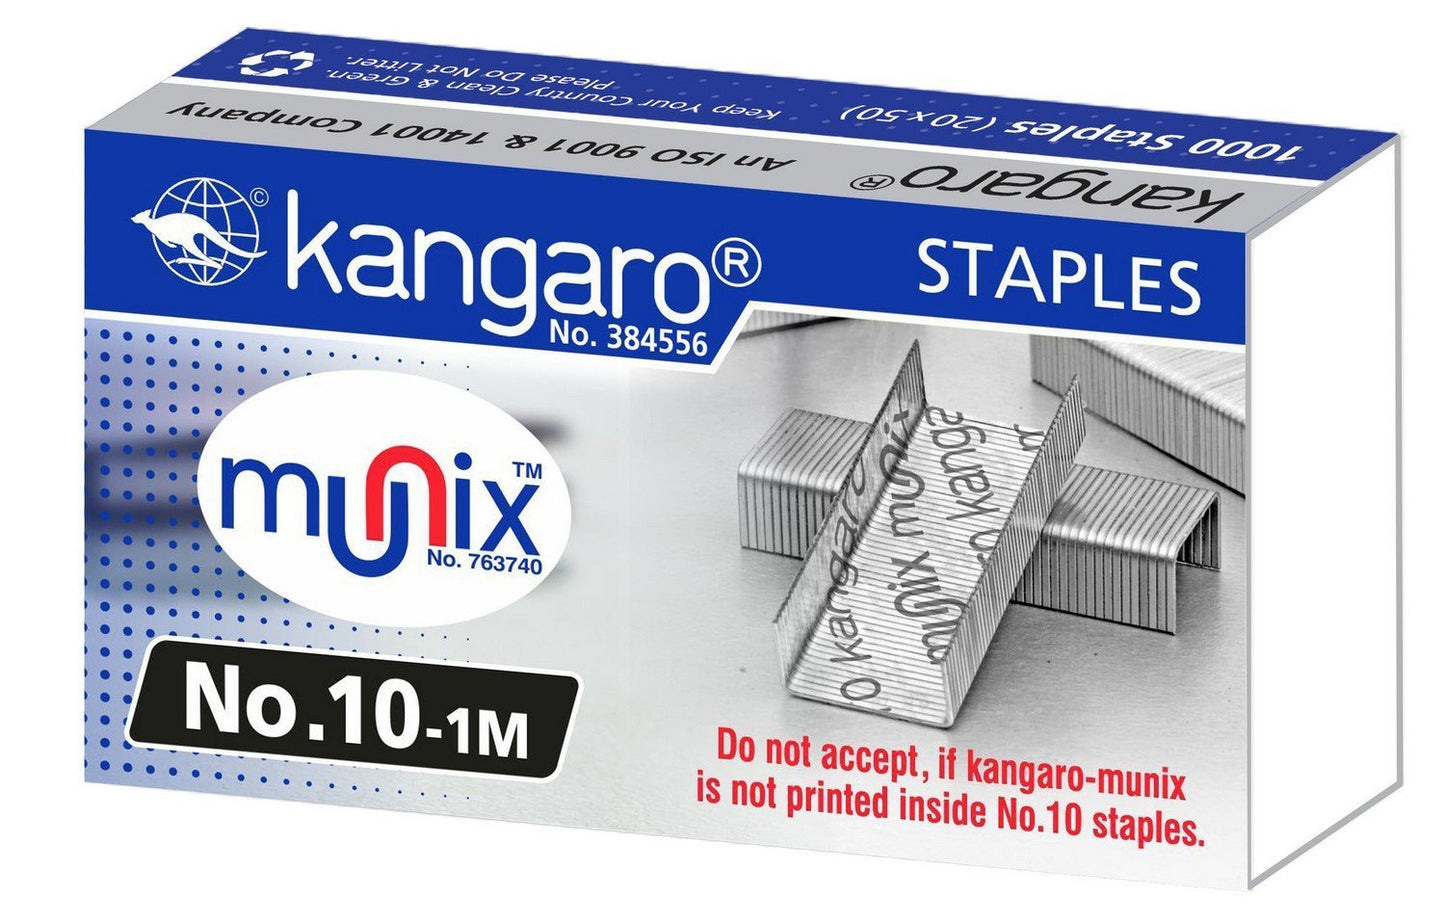 kangaro staples no. 10-1M (set of 2 box)